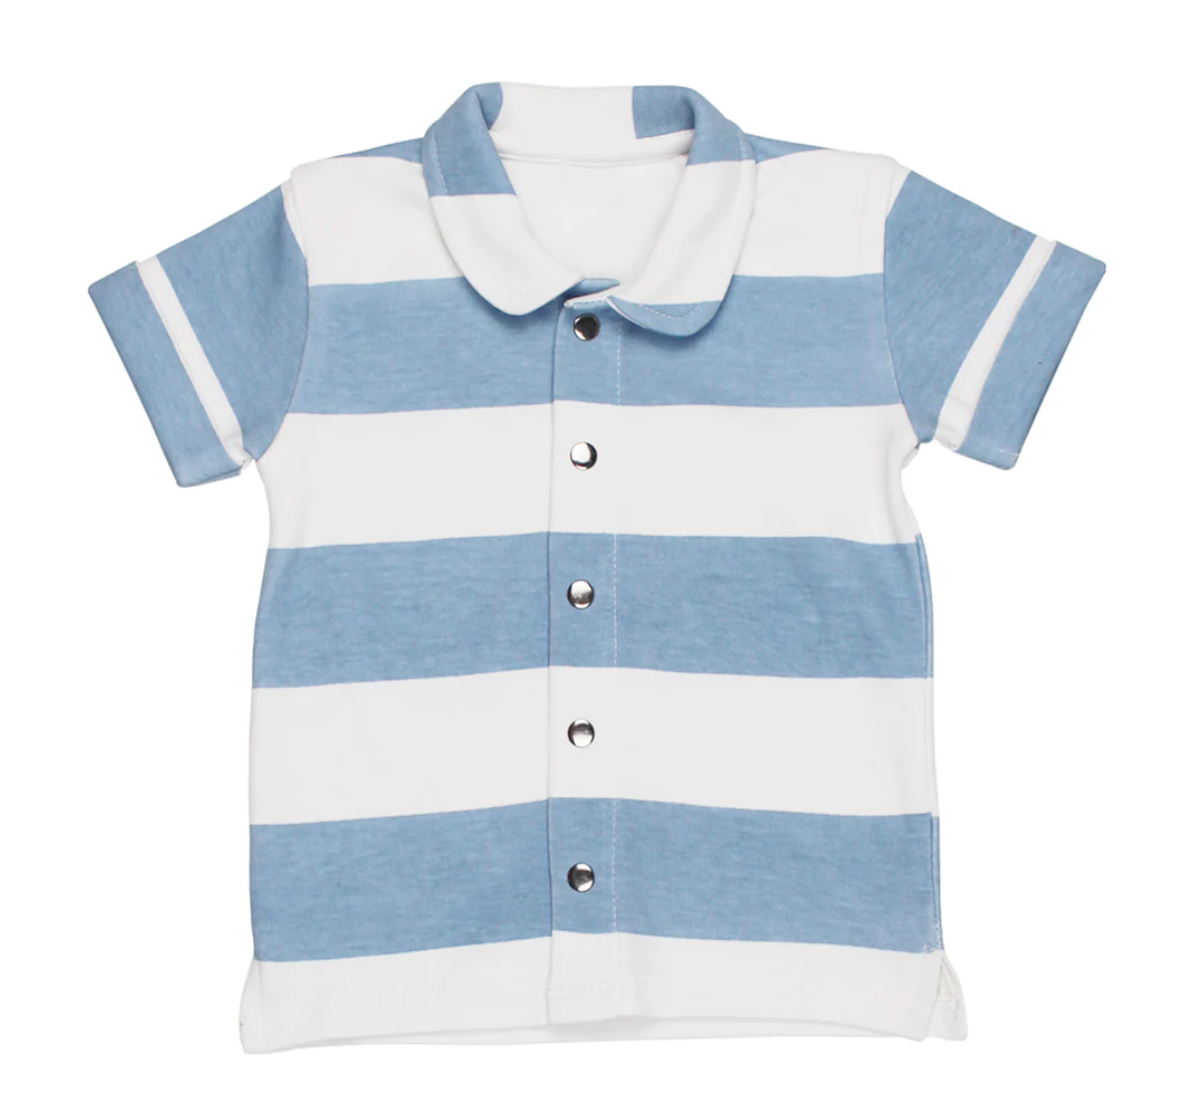 Organic Kids' Printed Button-Up Shirt in Pool Stripe